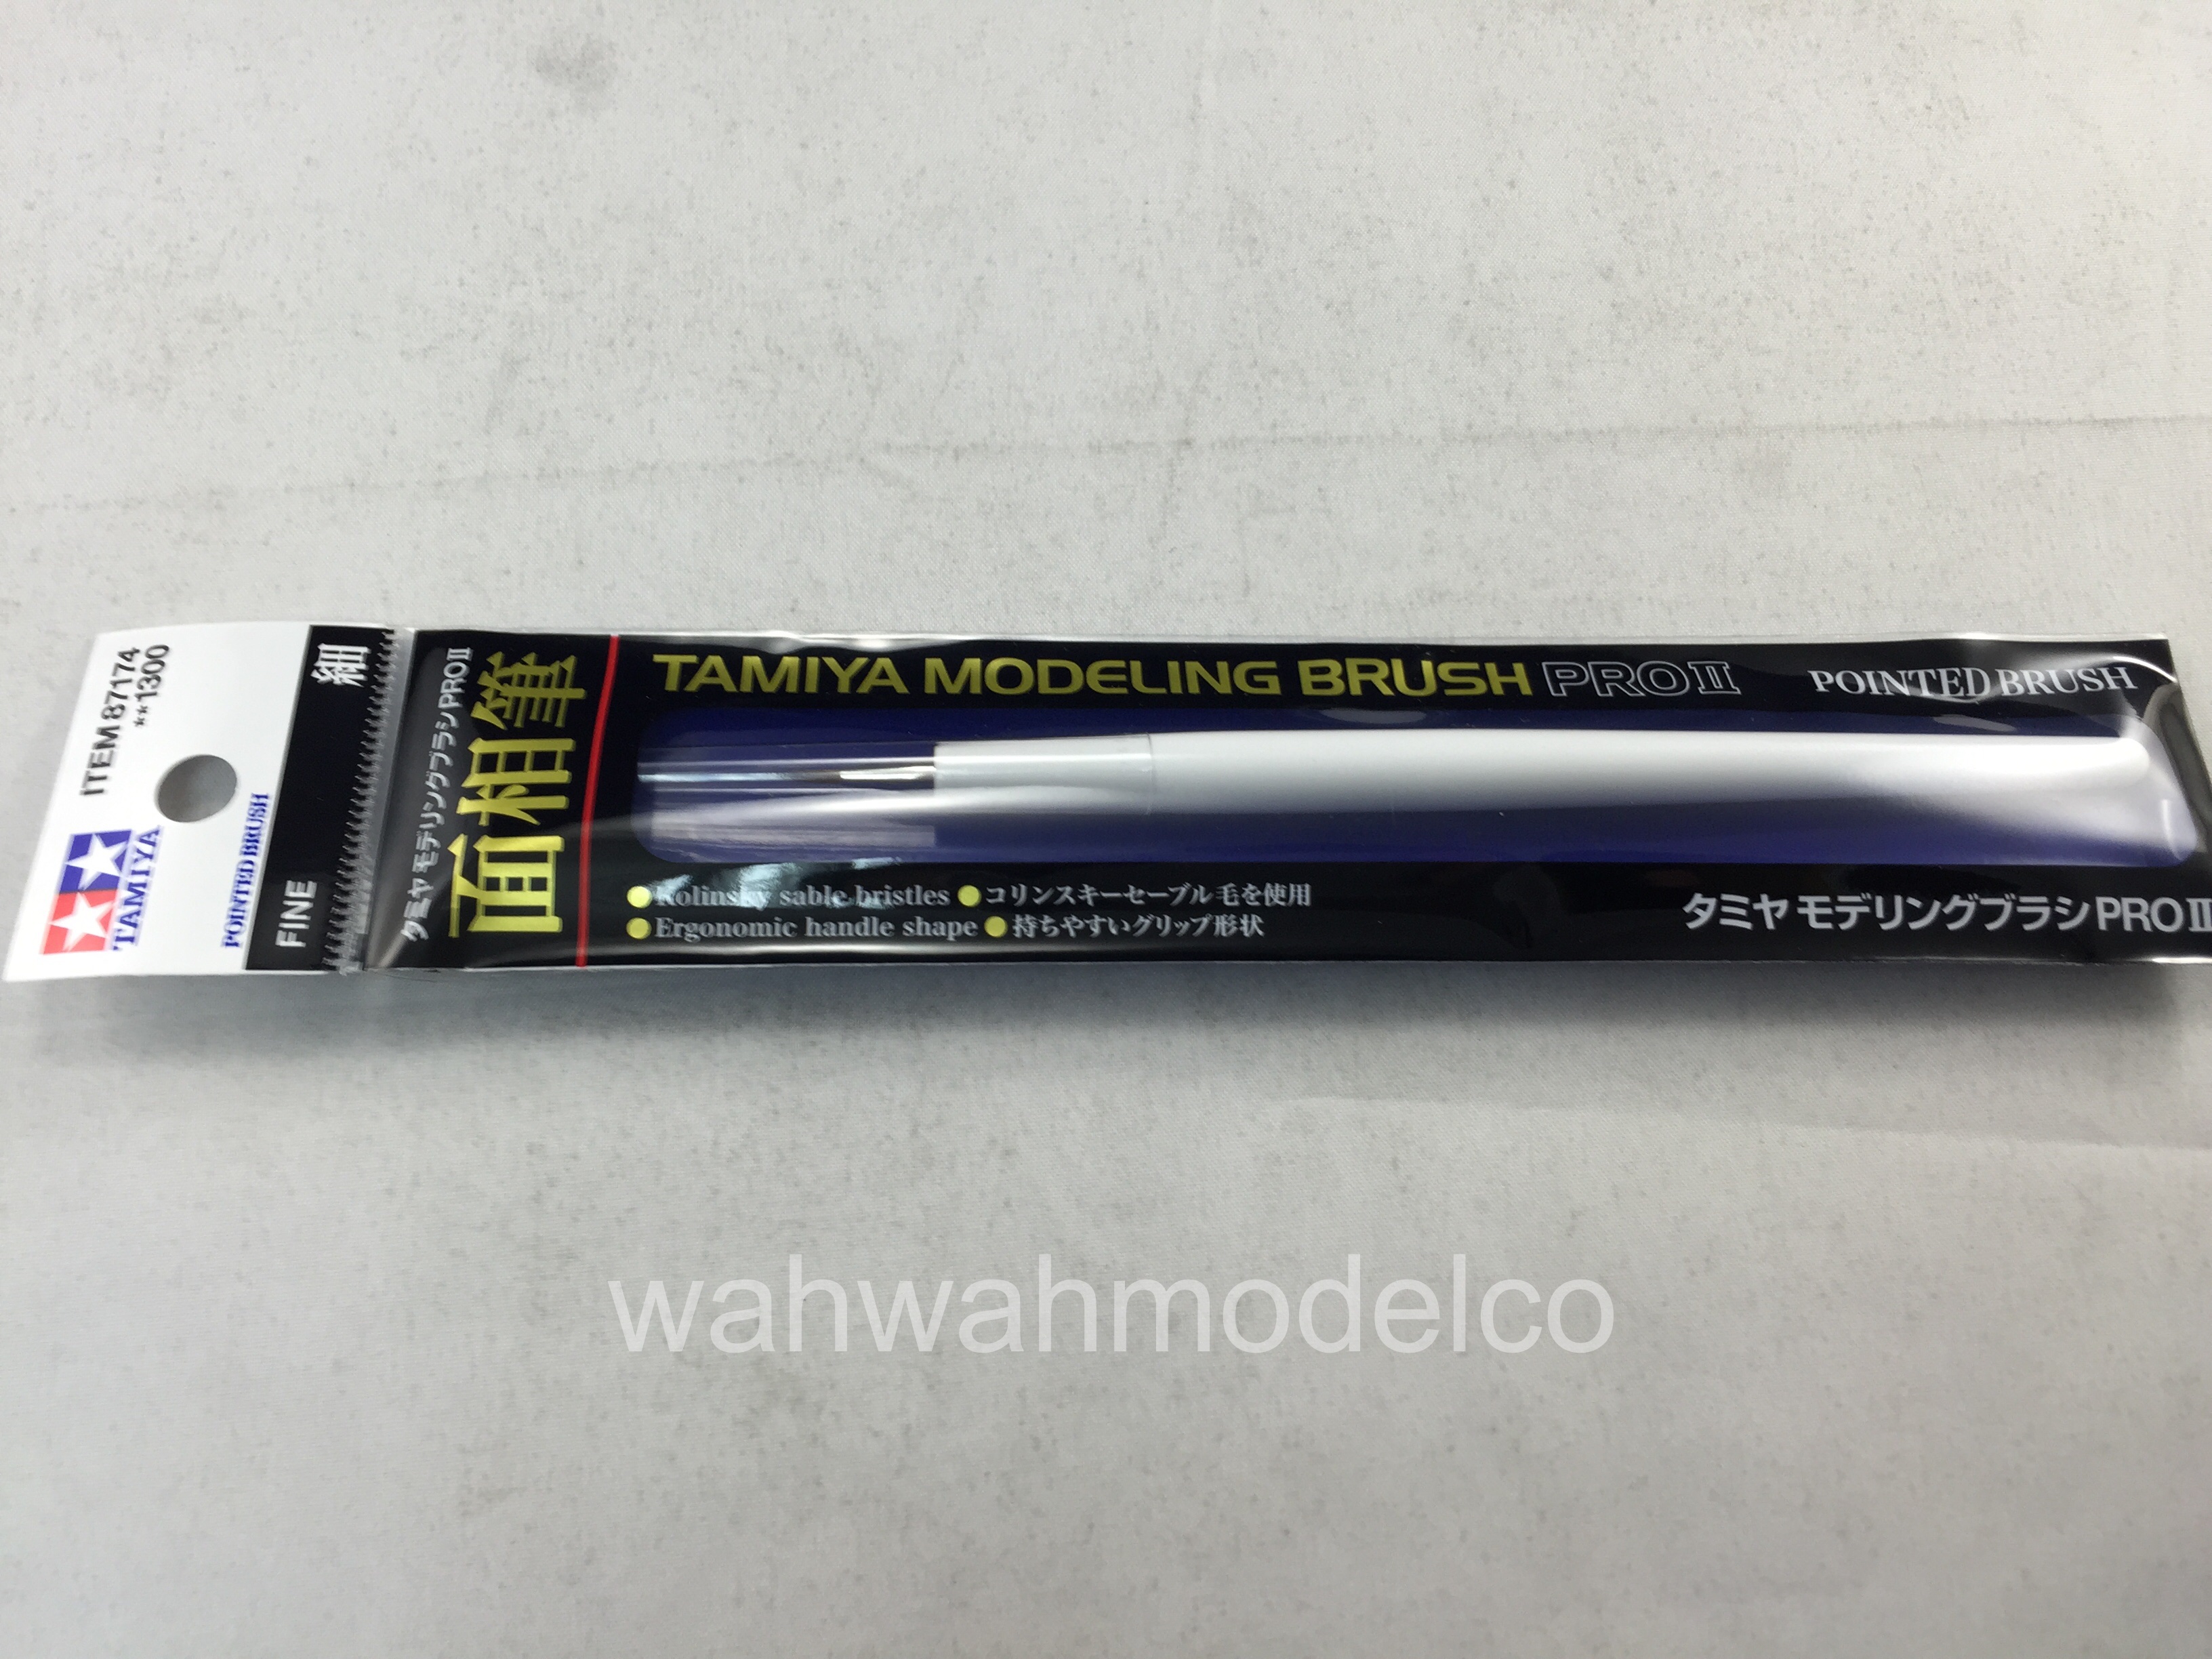 Tamiya Modeling Brush PRO II Pointed Brush 87174 Fine 